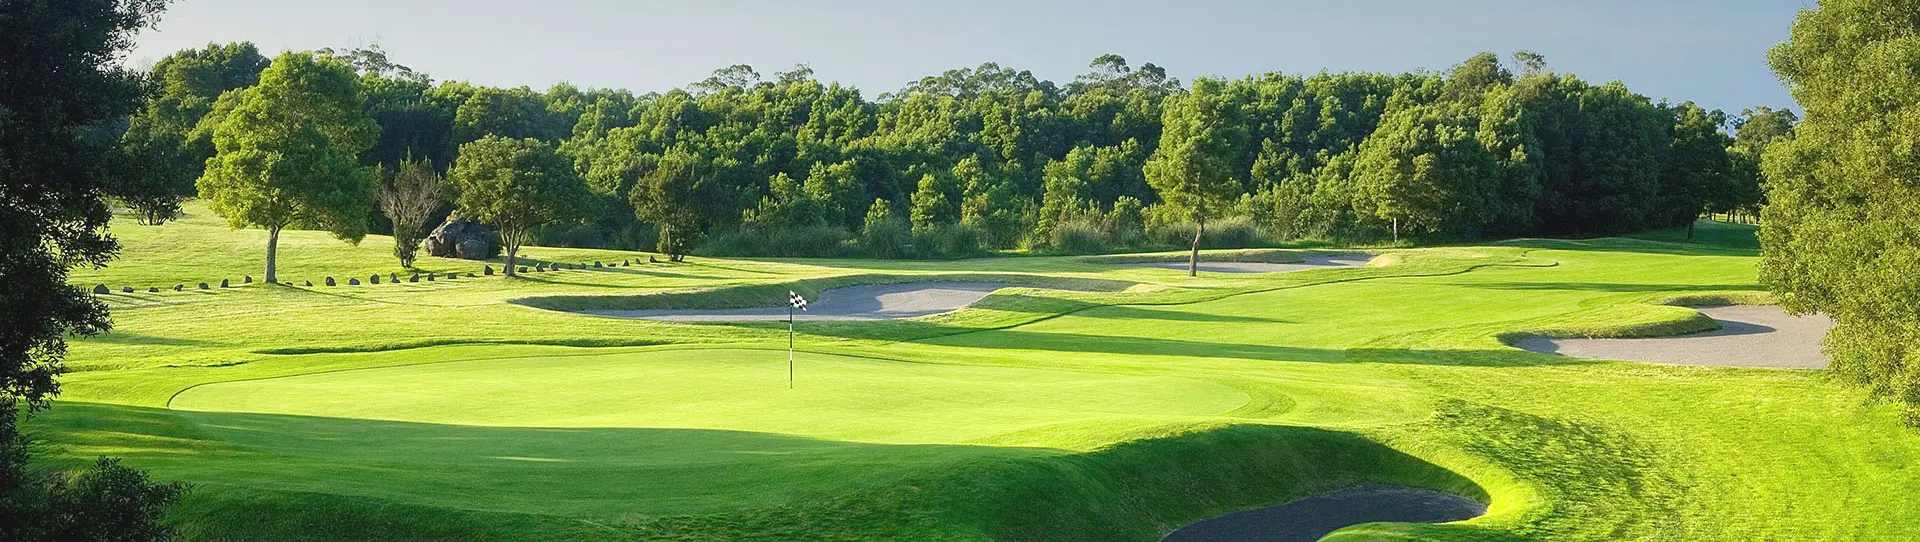 Portugal golf courses - Batalha Golf Club - Photo 1